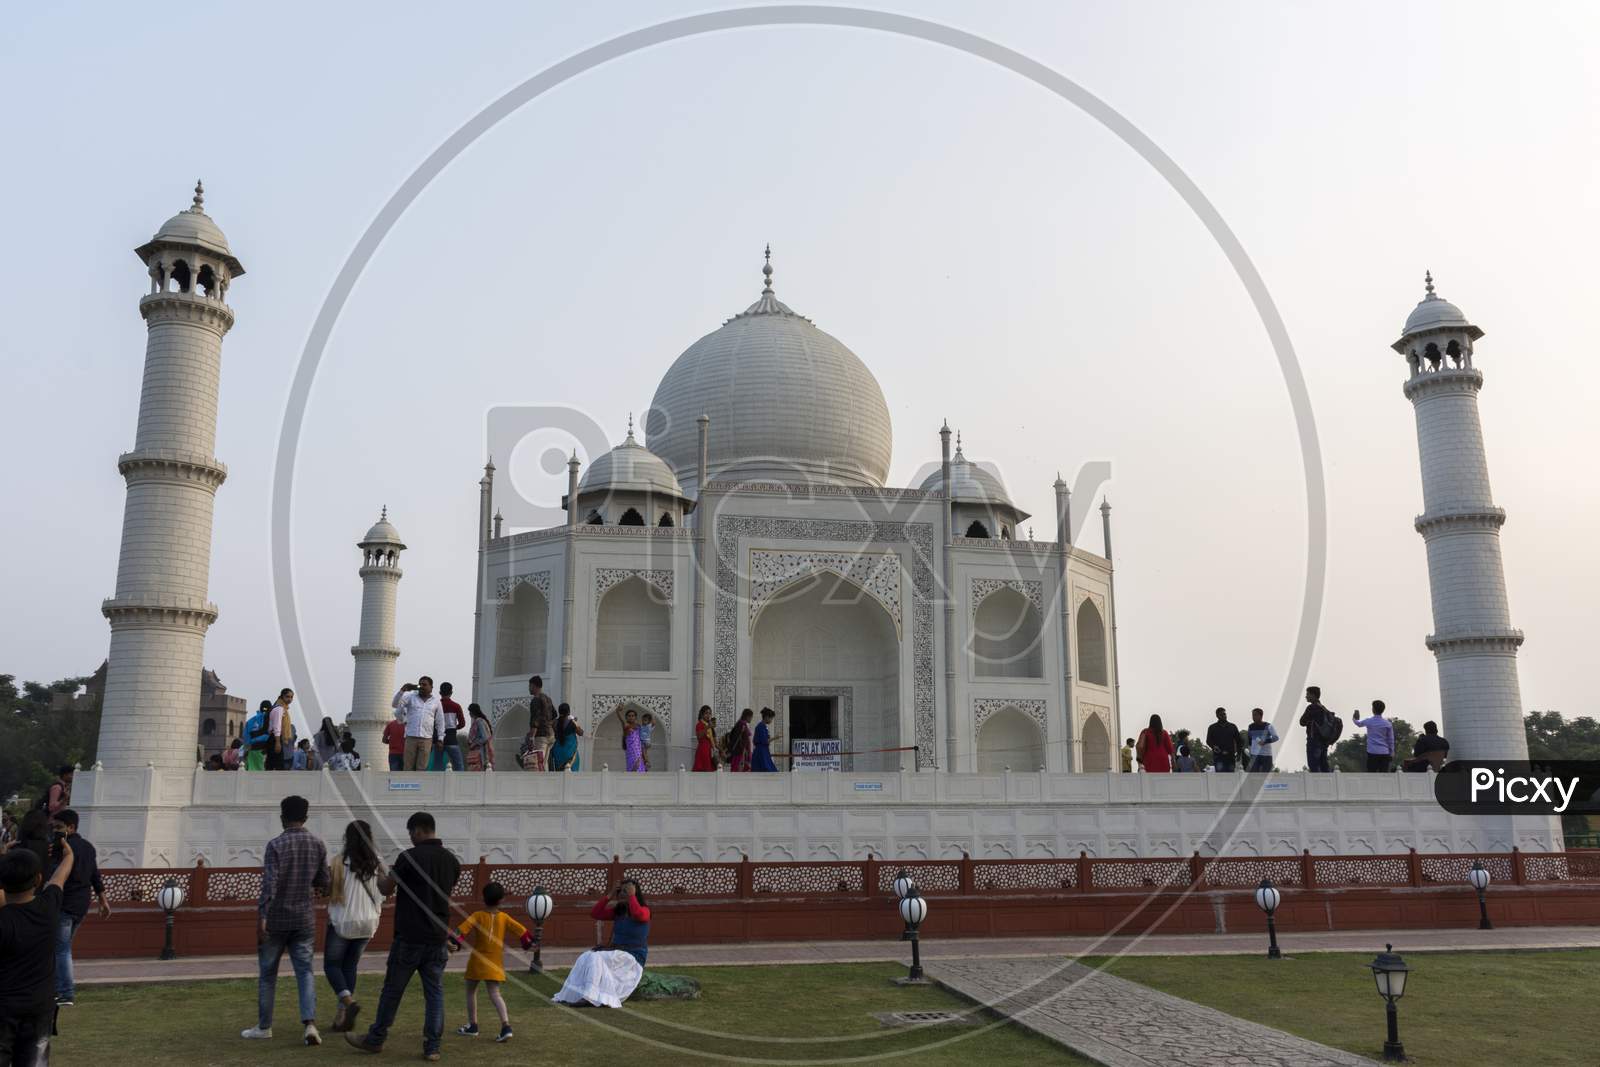 Day Time View Of The Replica Of Taj Mahal At Eco Park In Kolkata, India.